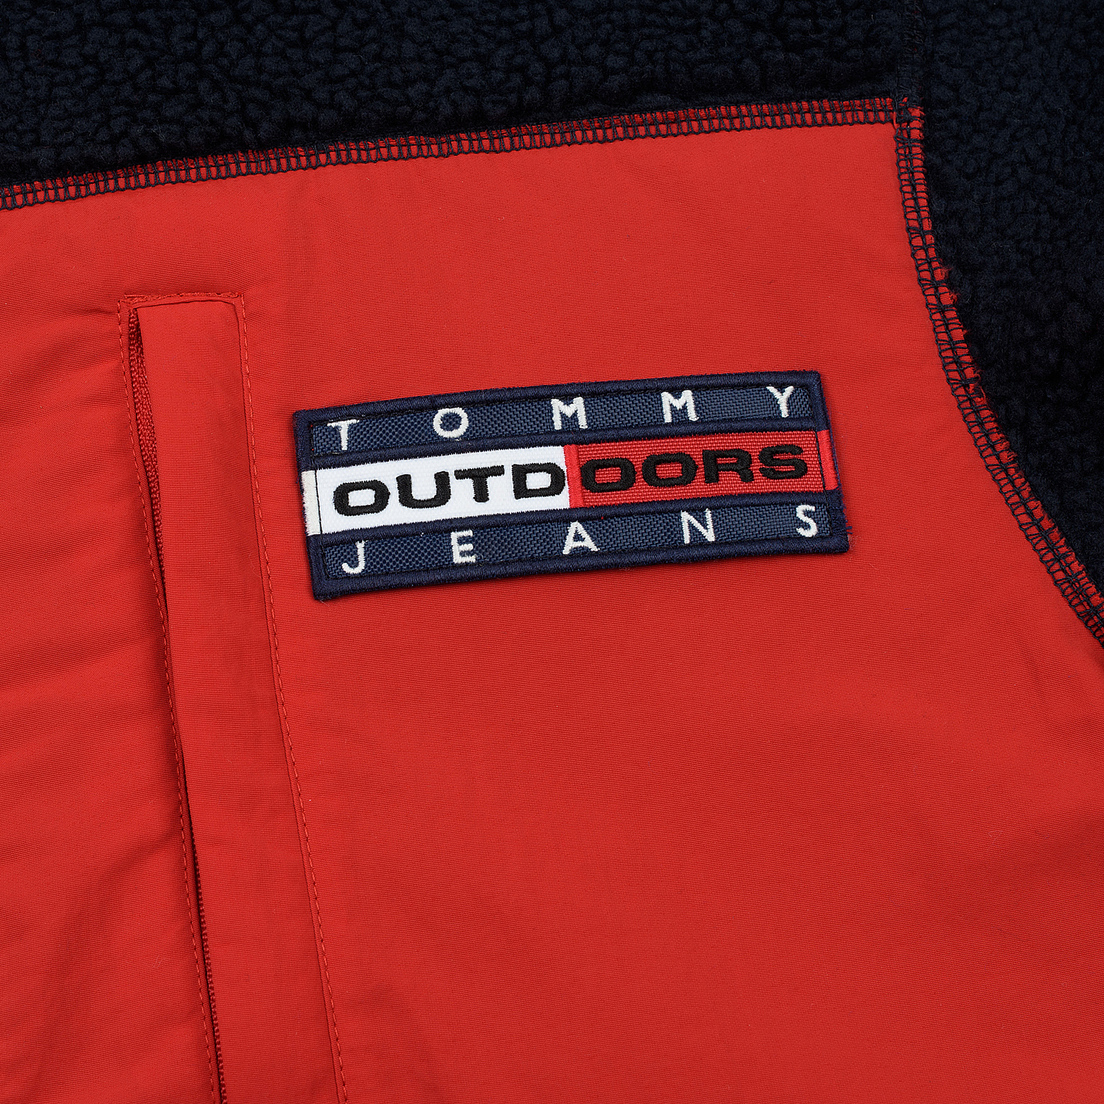 Tommy Jeans Мужская куртка Flag Zipthru Expedition 6.0